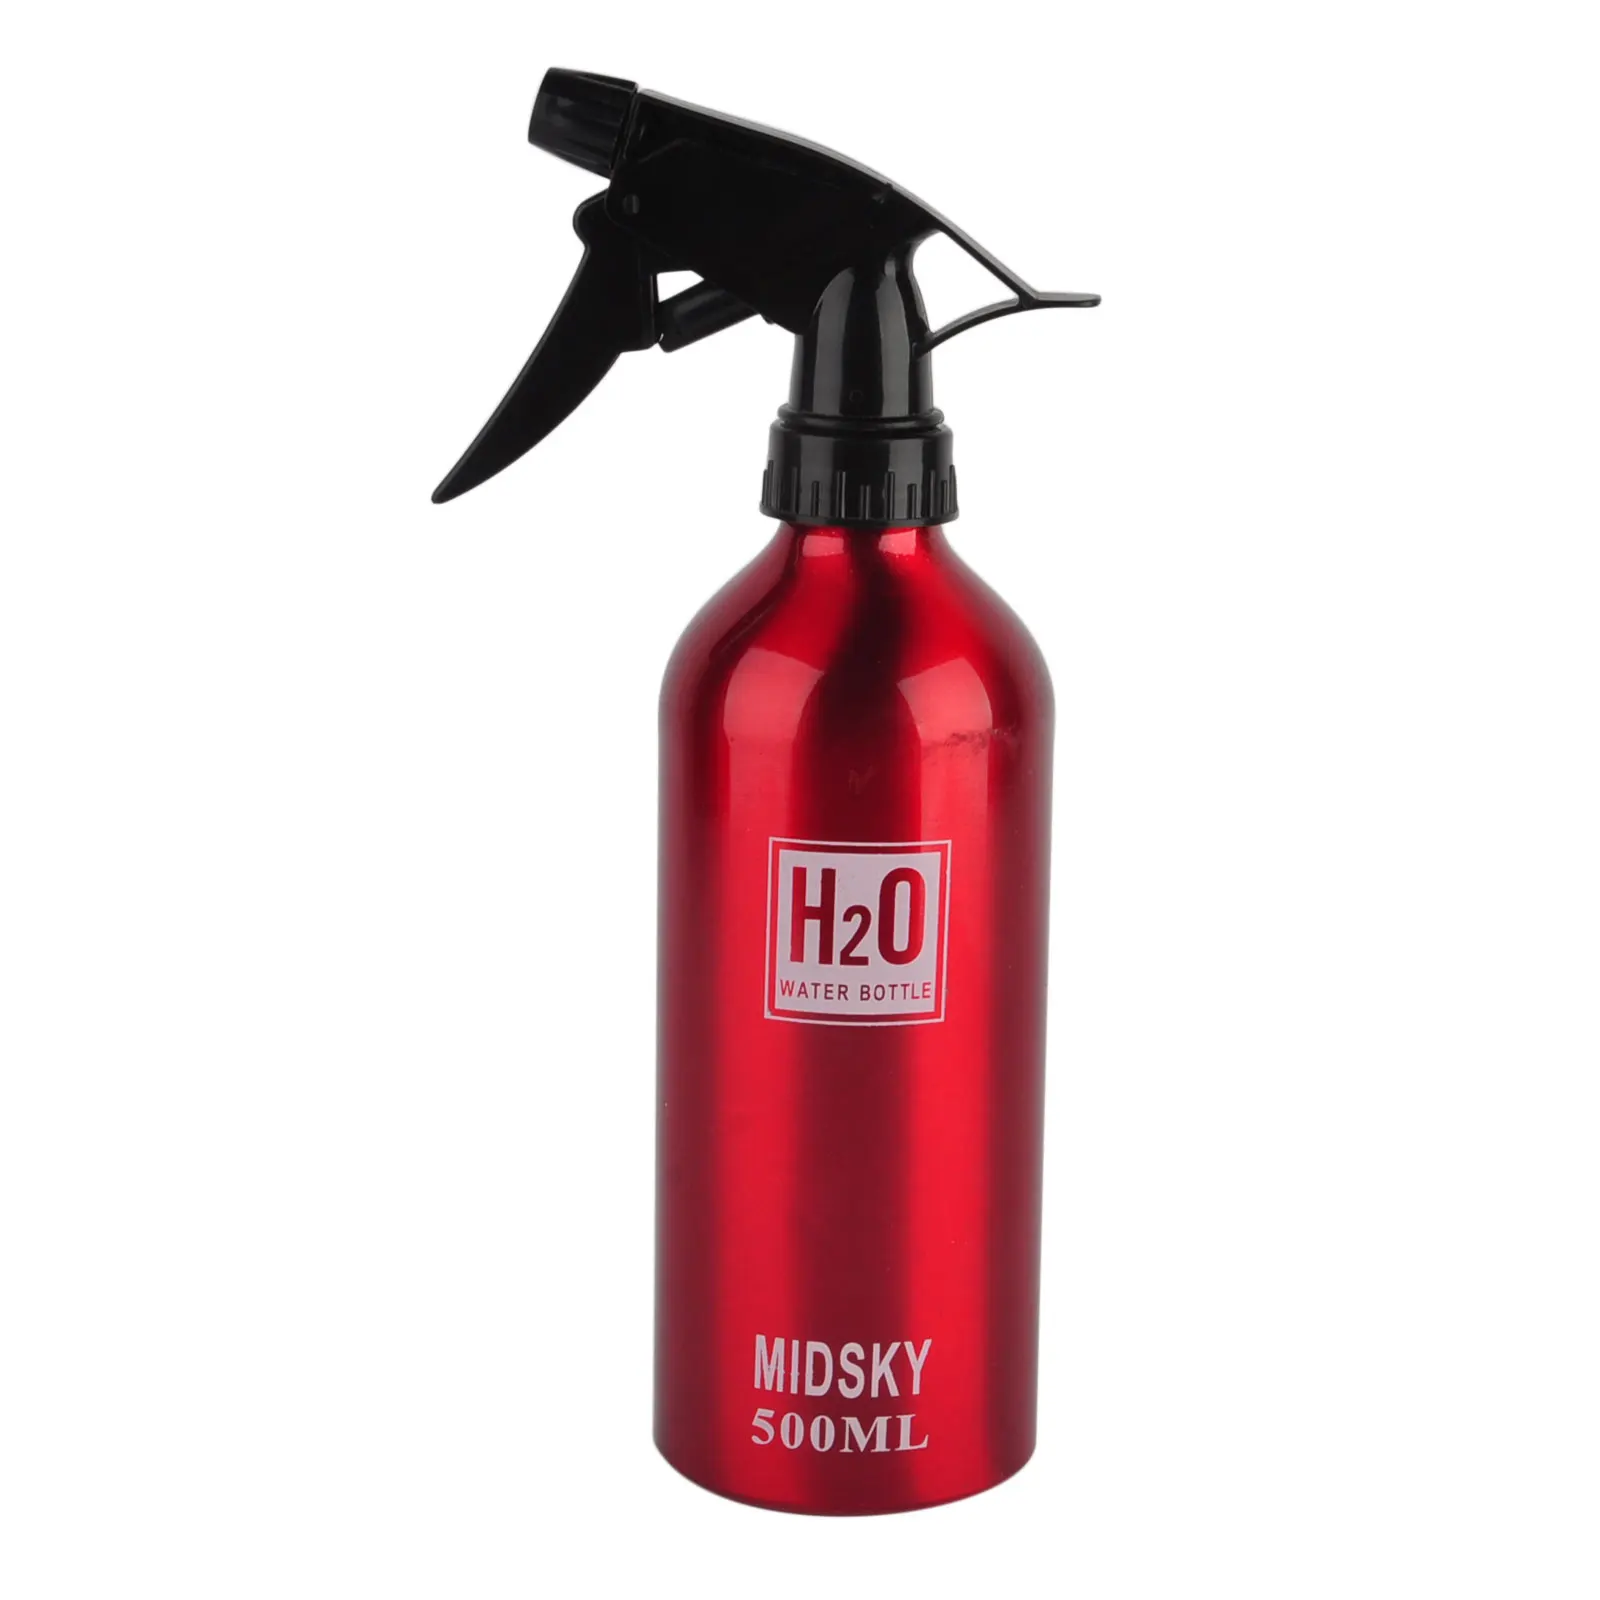 500ml Garden Red Spray Bottles Body High Quality Black Water Bottle Trigger Head Salon Hairdressing Tool Mayitr